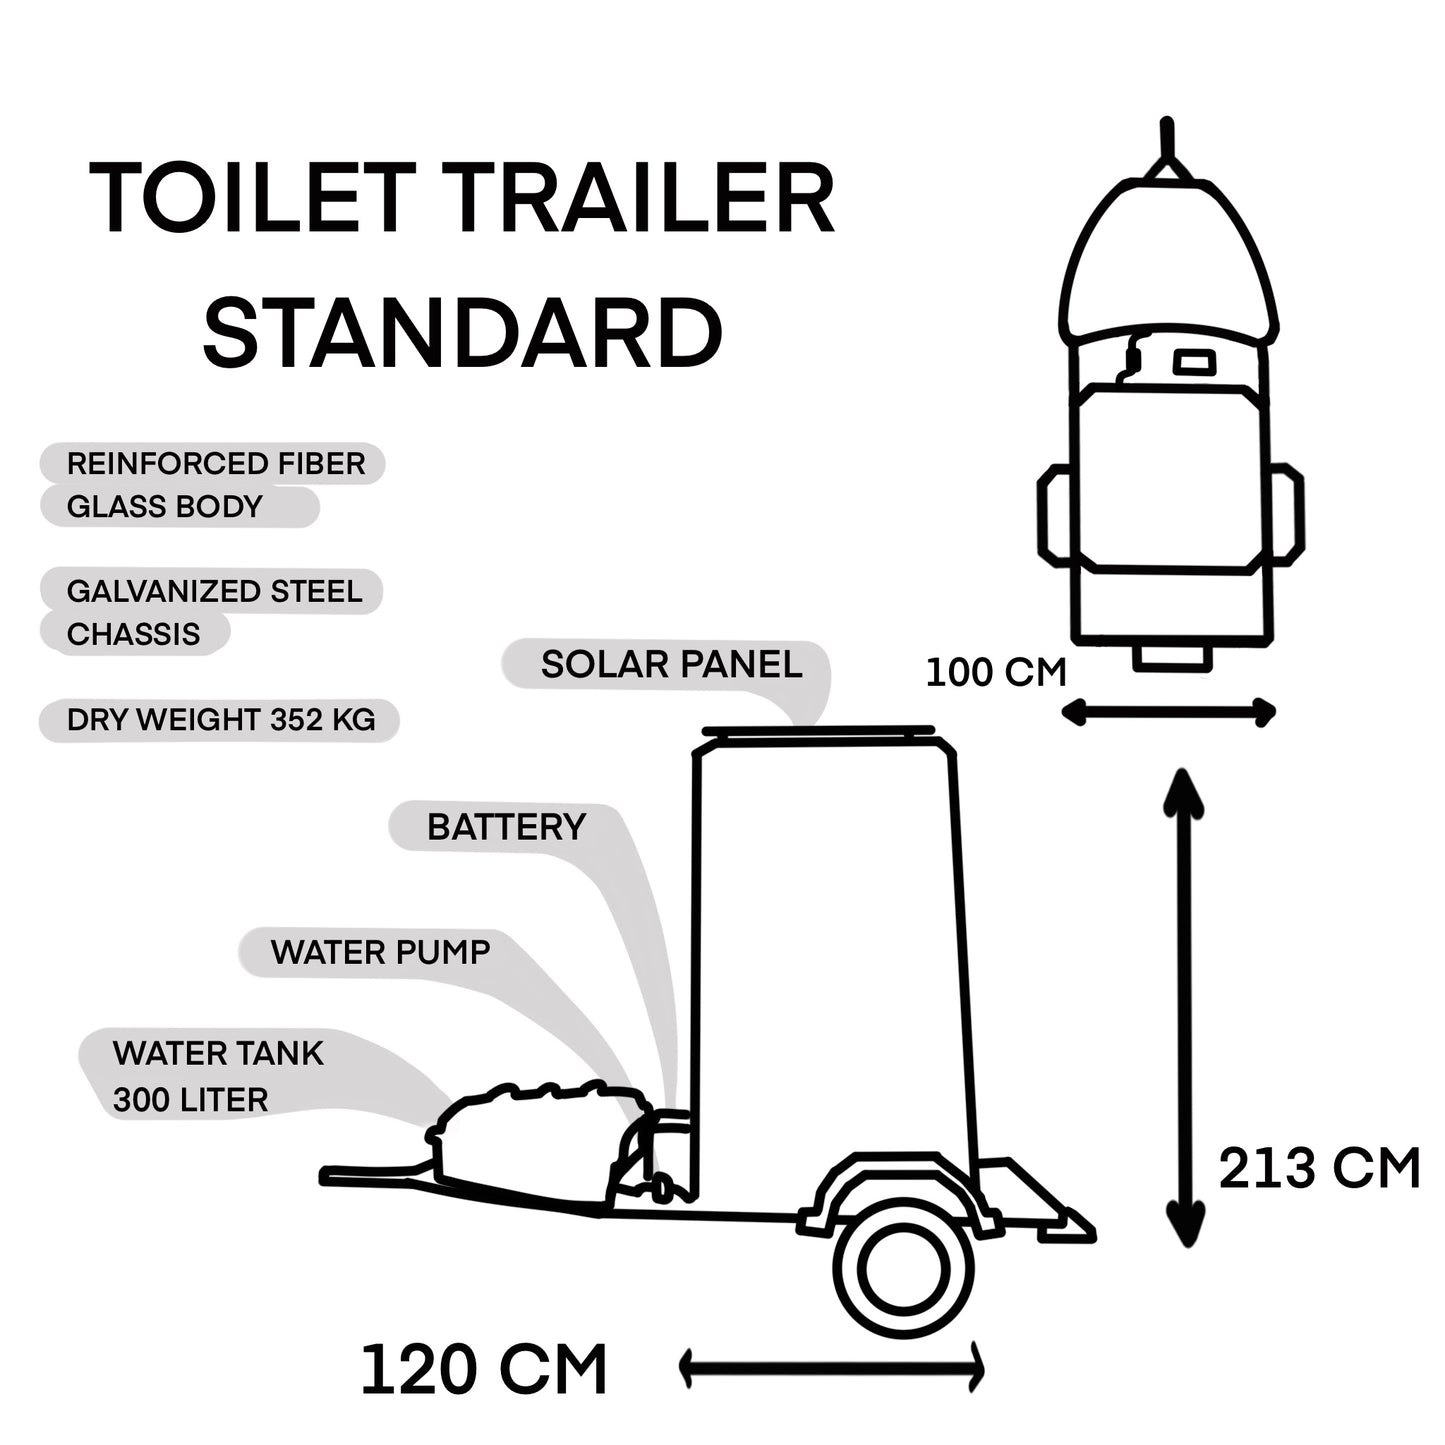 Toilet Trailer Standard